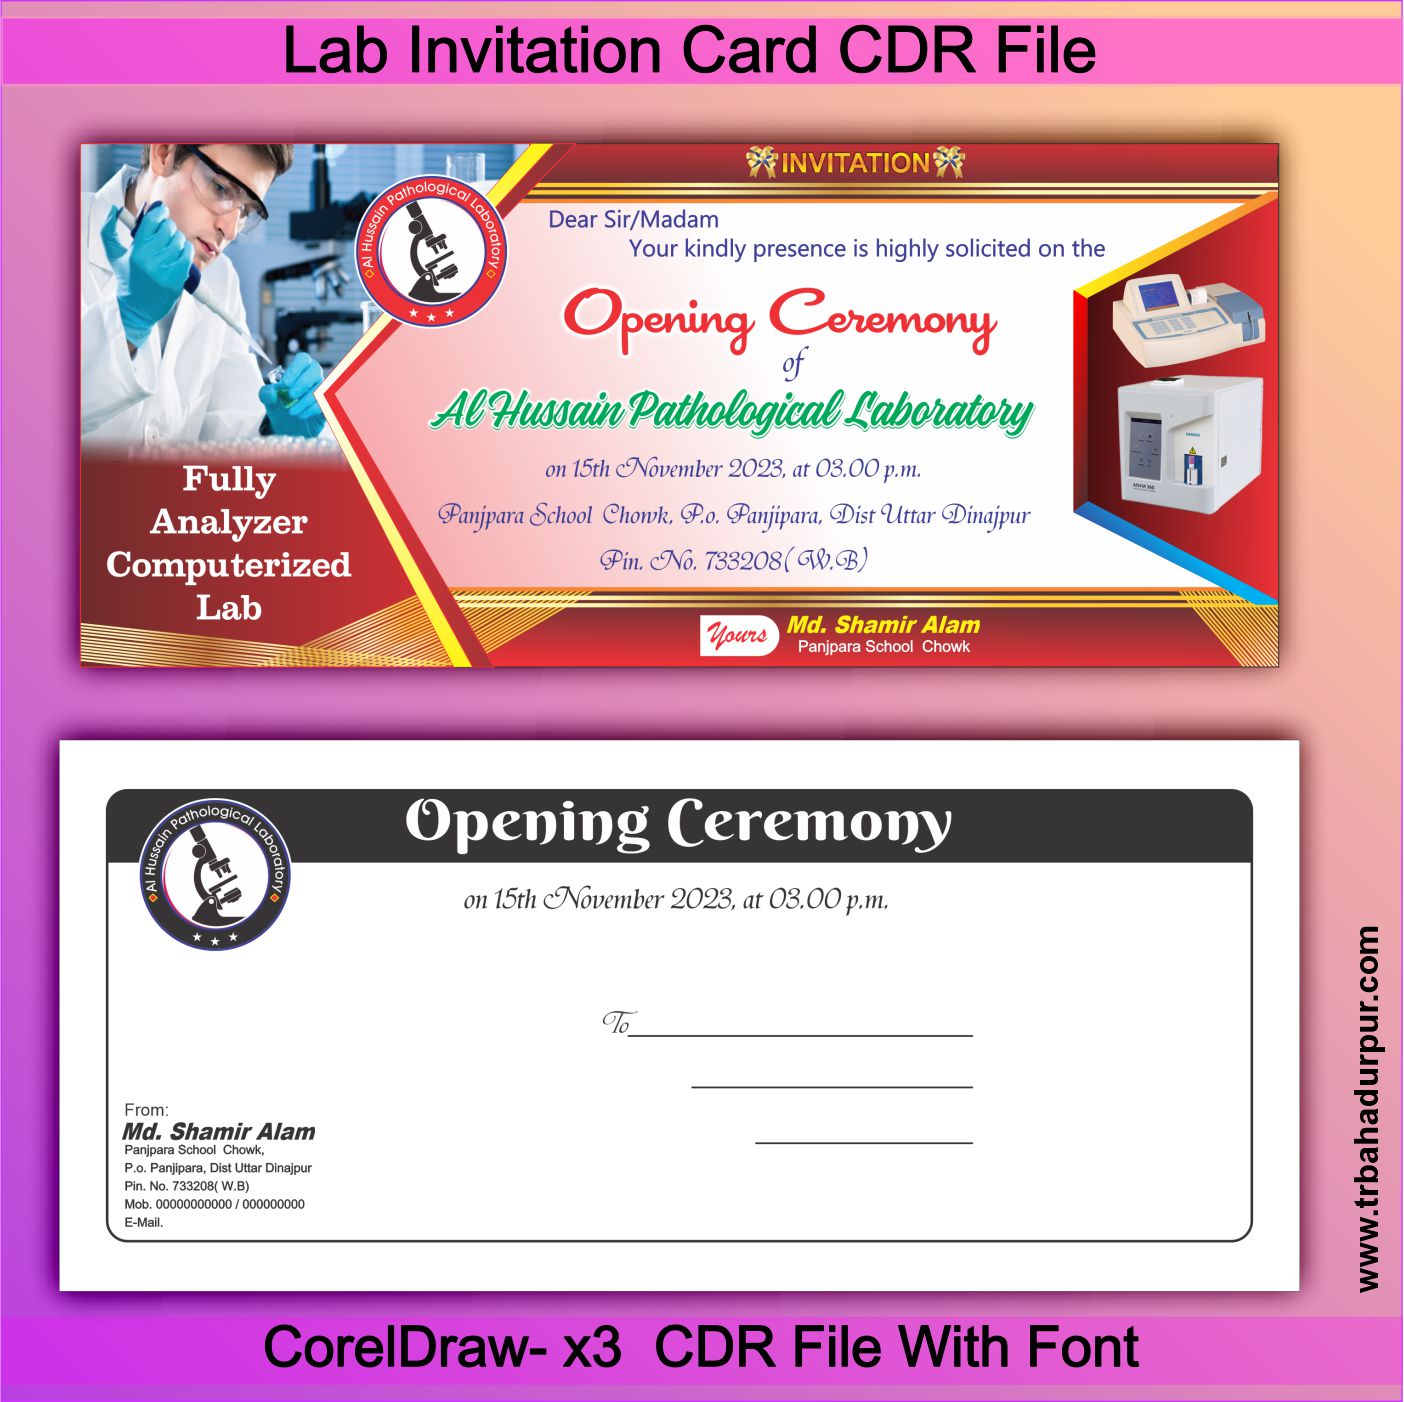 Lab Invitation Card CDR File